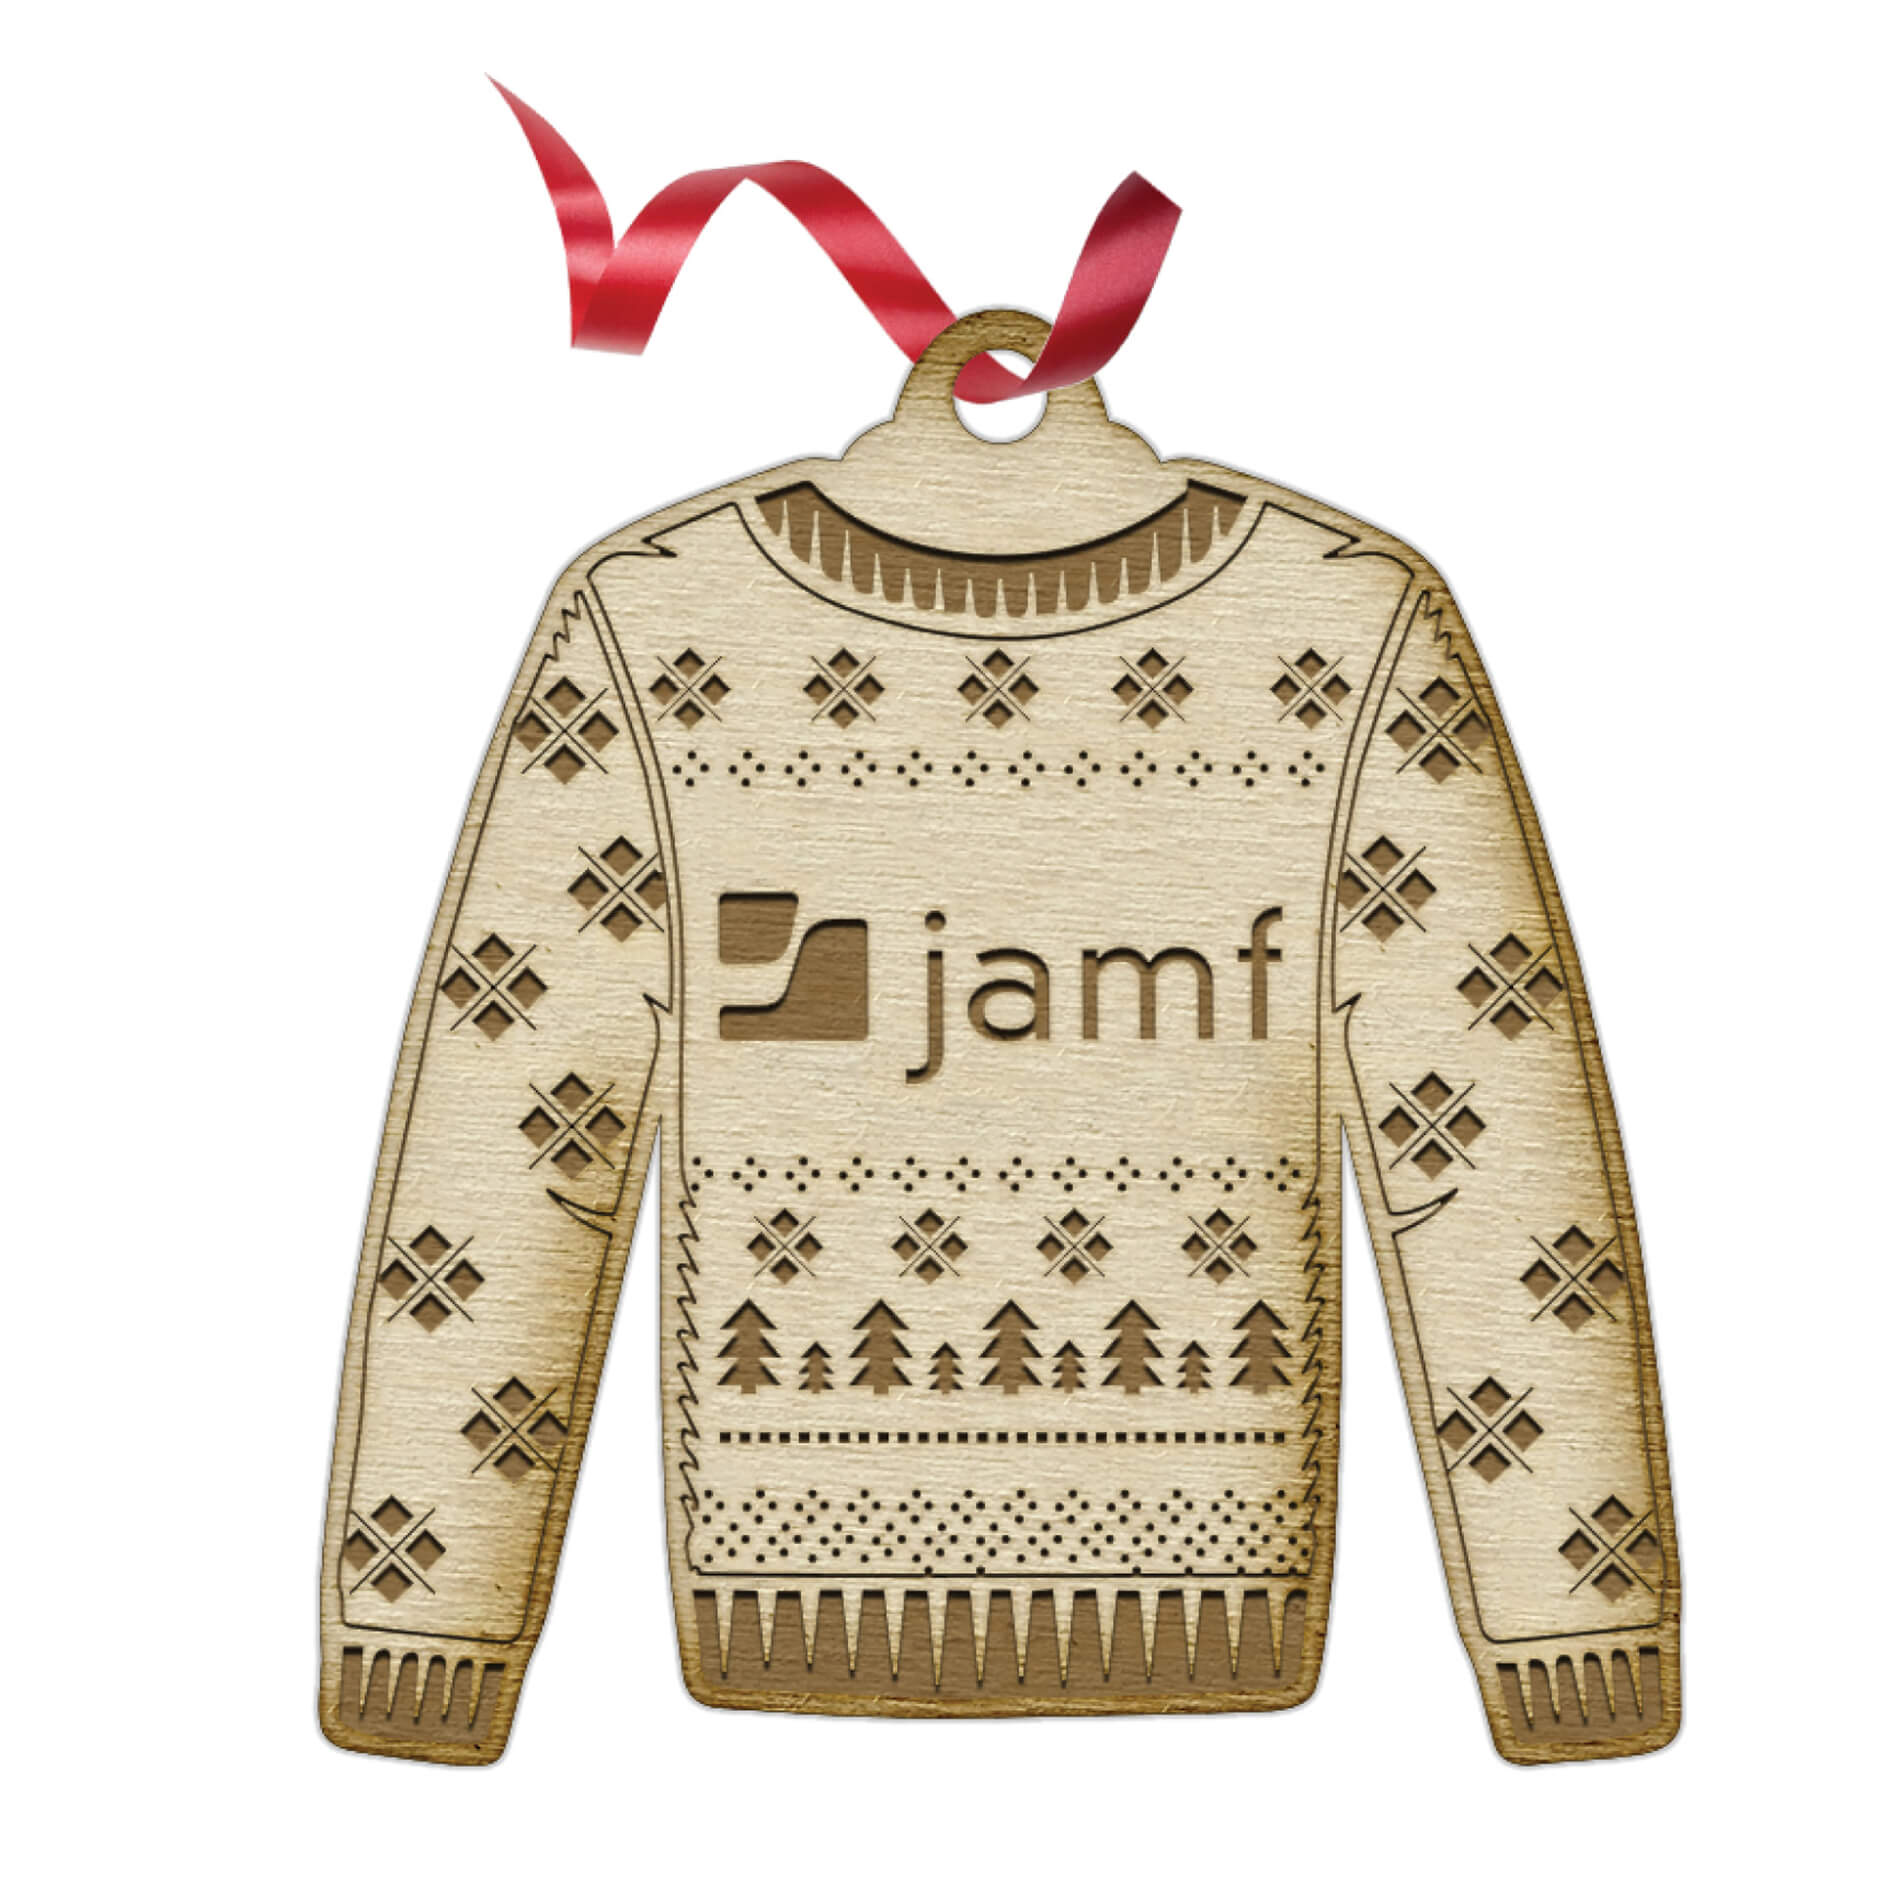 jam-wood-ornaments